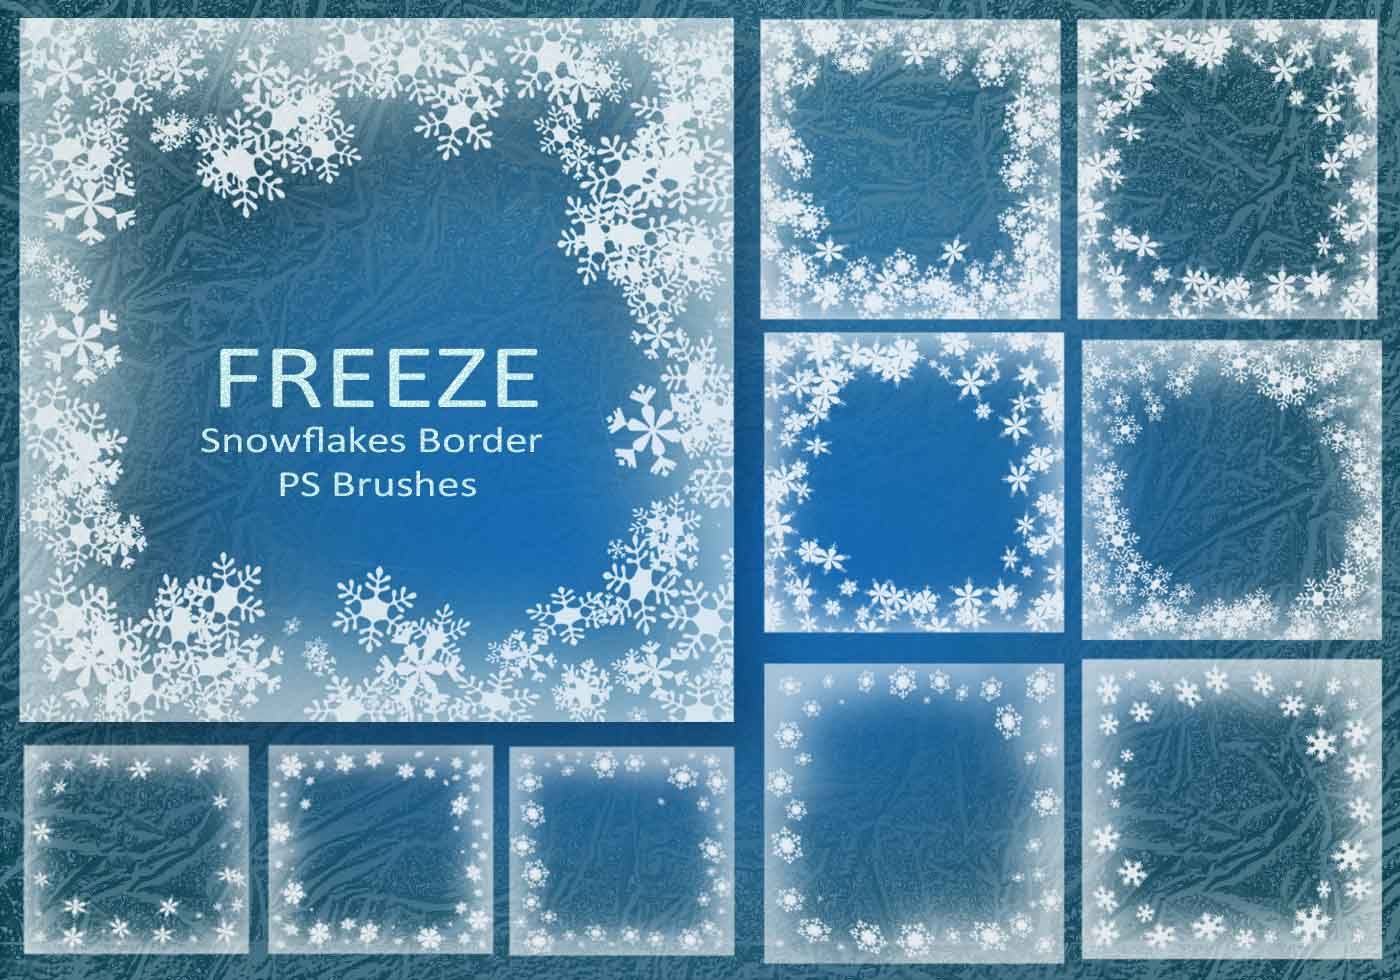 20 Freeze Border Ps Brushes Abr Vol 13 Ps Brushes Snow Photoshop Border